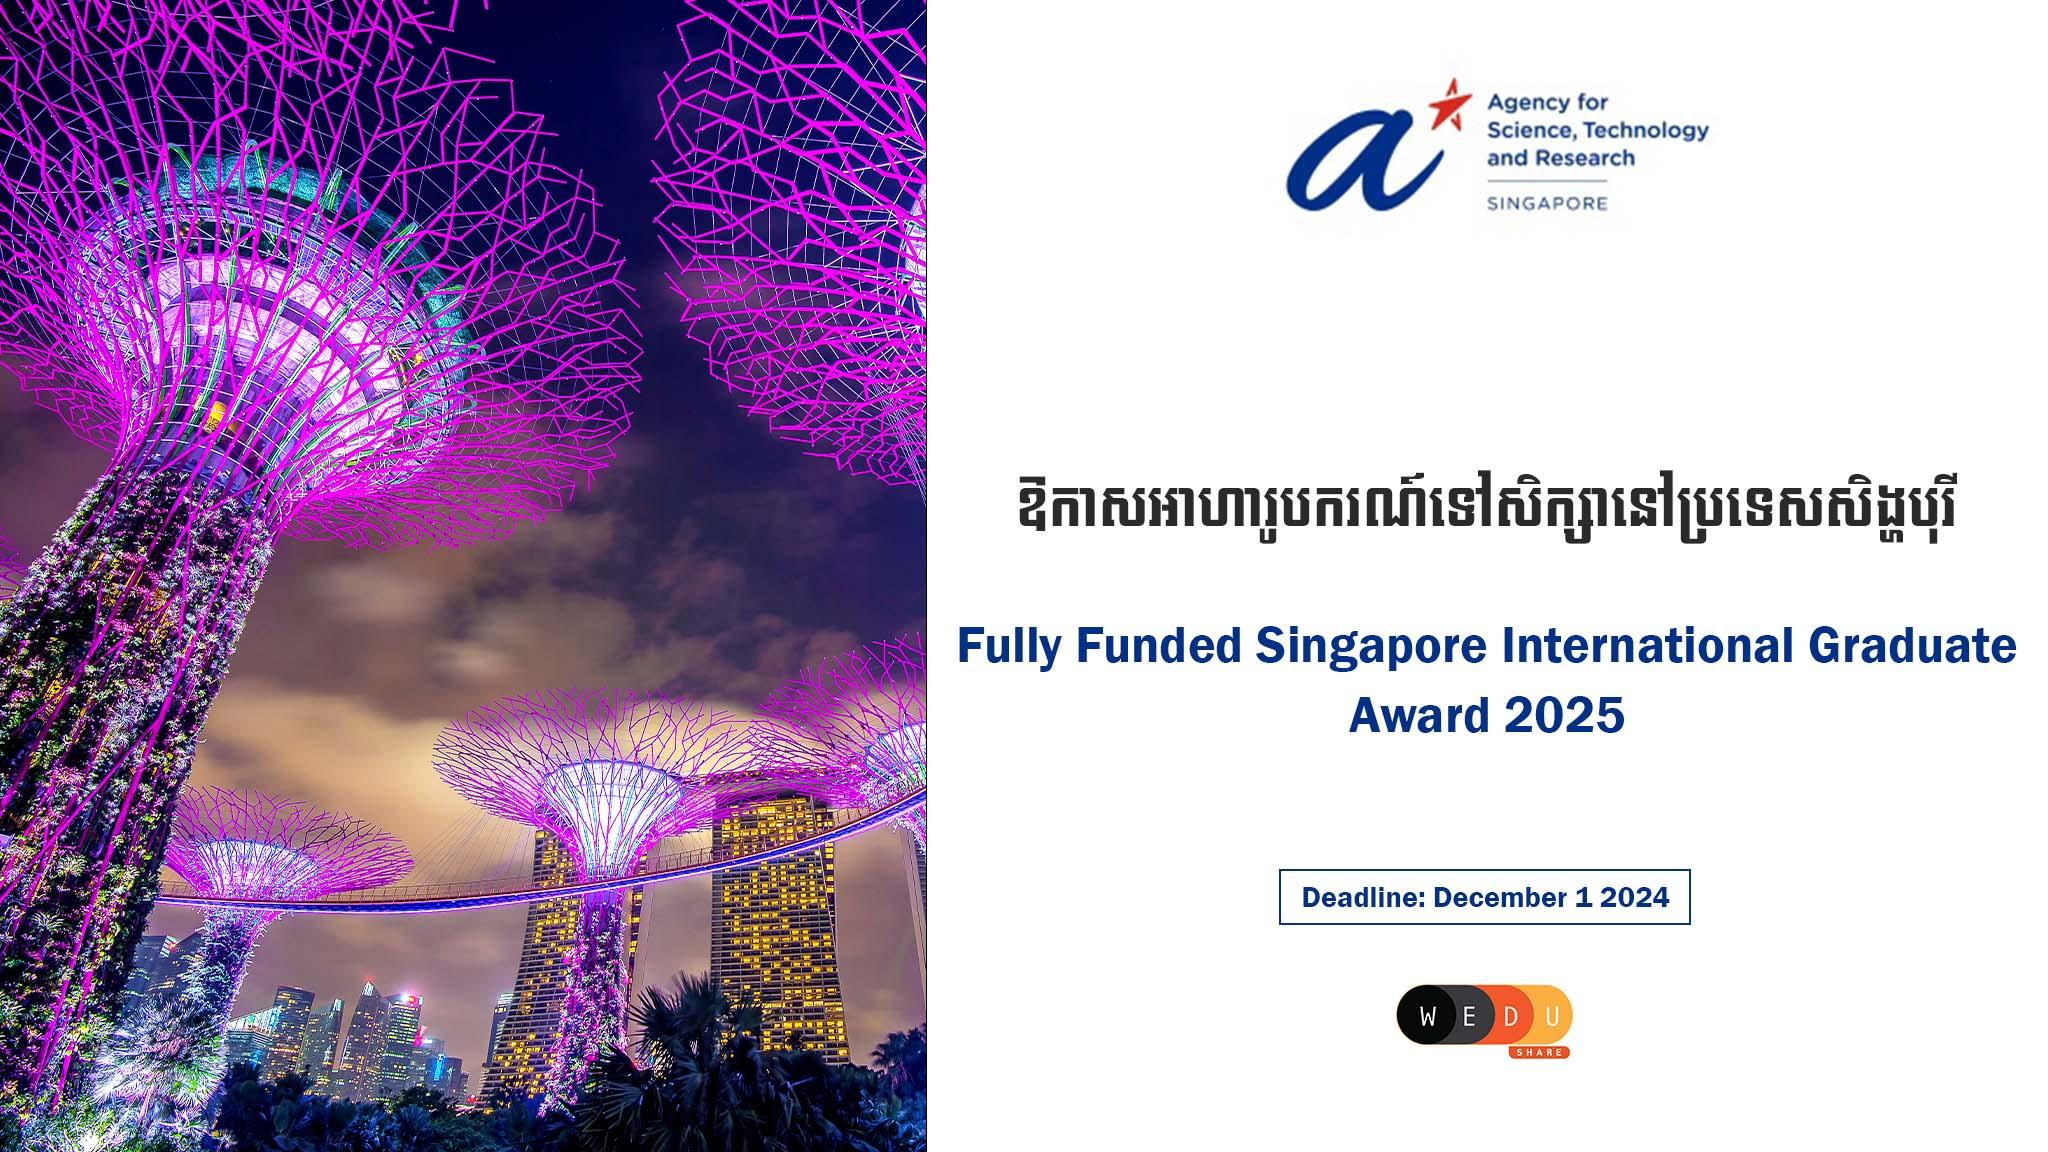 Singapore International Graduate Award 2025 